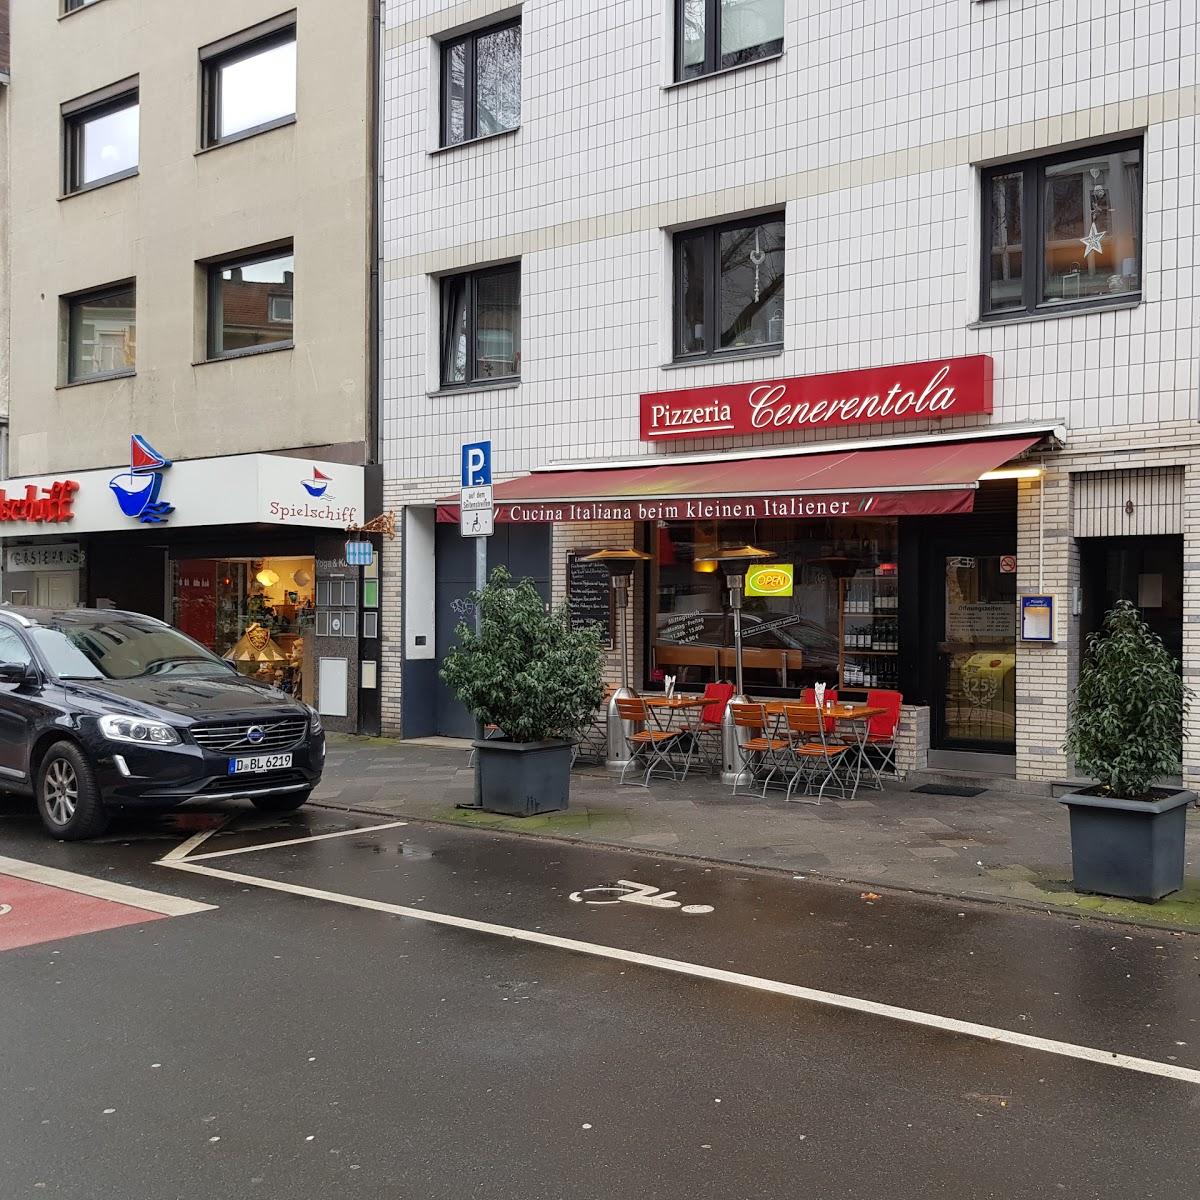 Restaurant "Pizzeria Cenerentola" in Düsseldorf